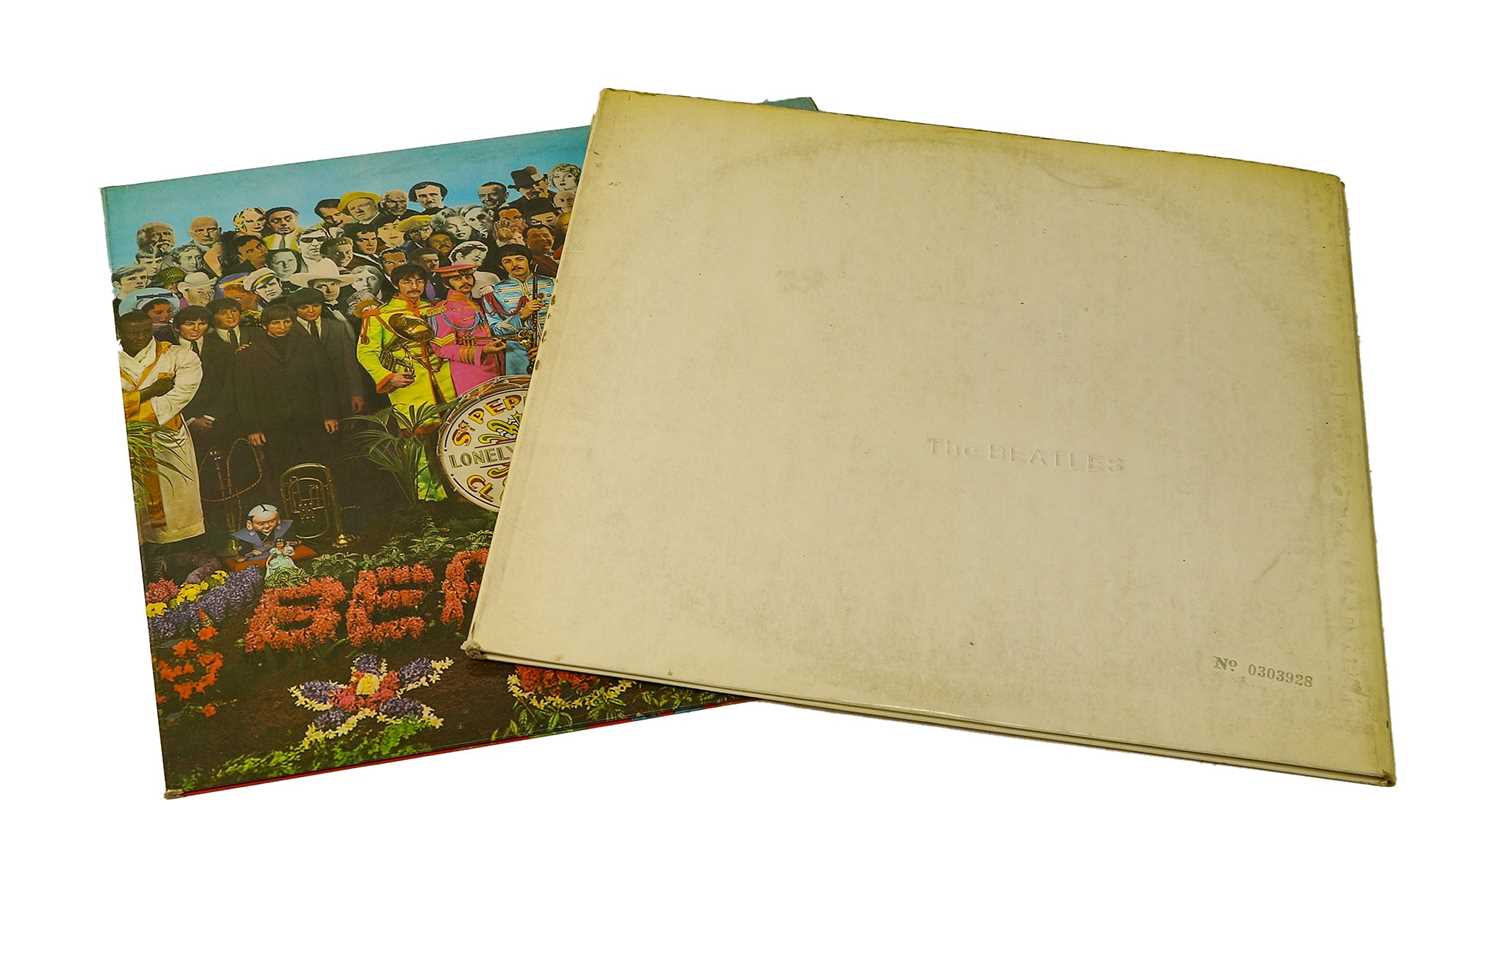 Lot 80 - The Beatles White Album